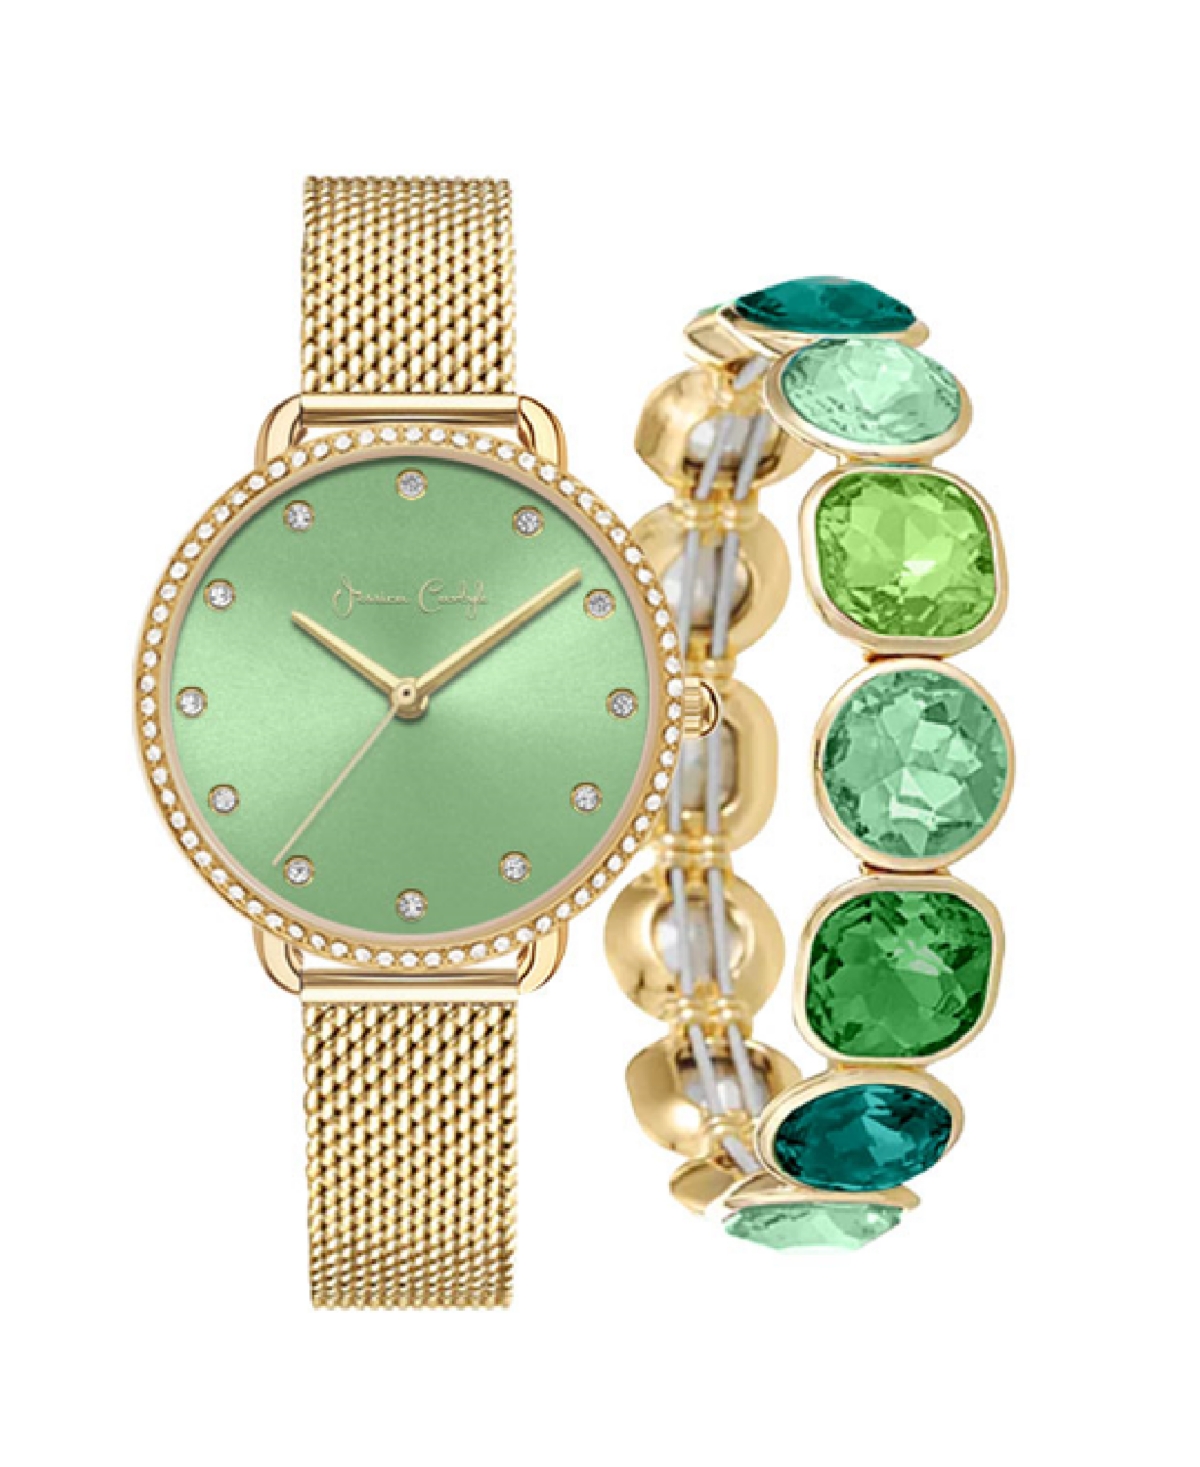 Women's Quartz Gold-Tone Mesh Watch 34mm Gift Set - Shiny Gold, Light Green Sunray